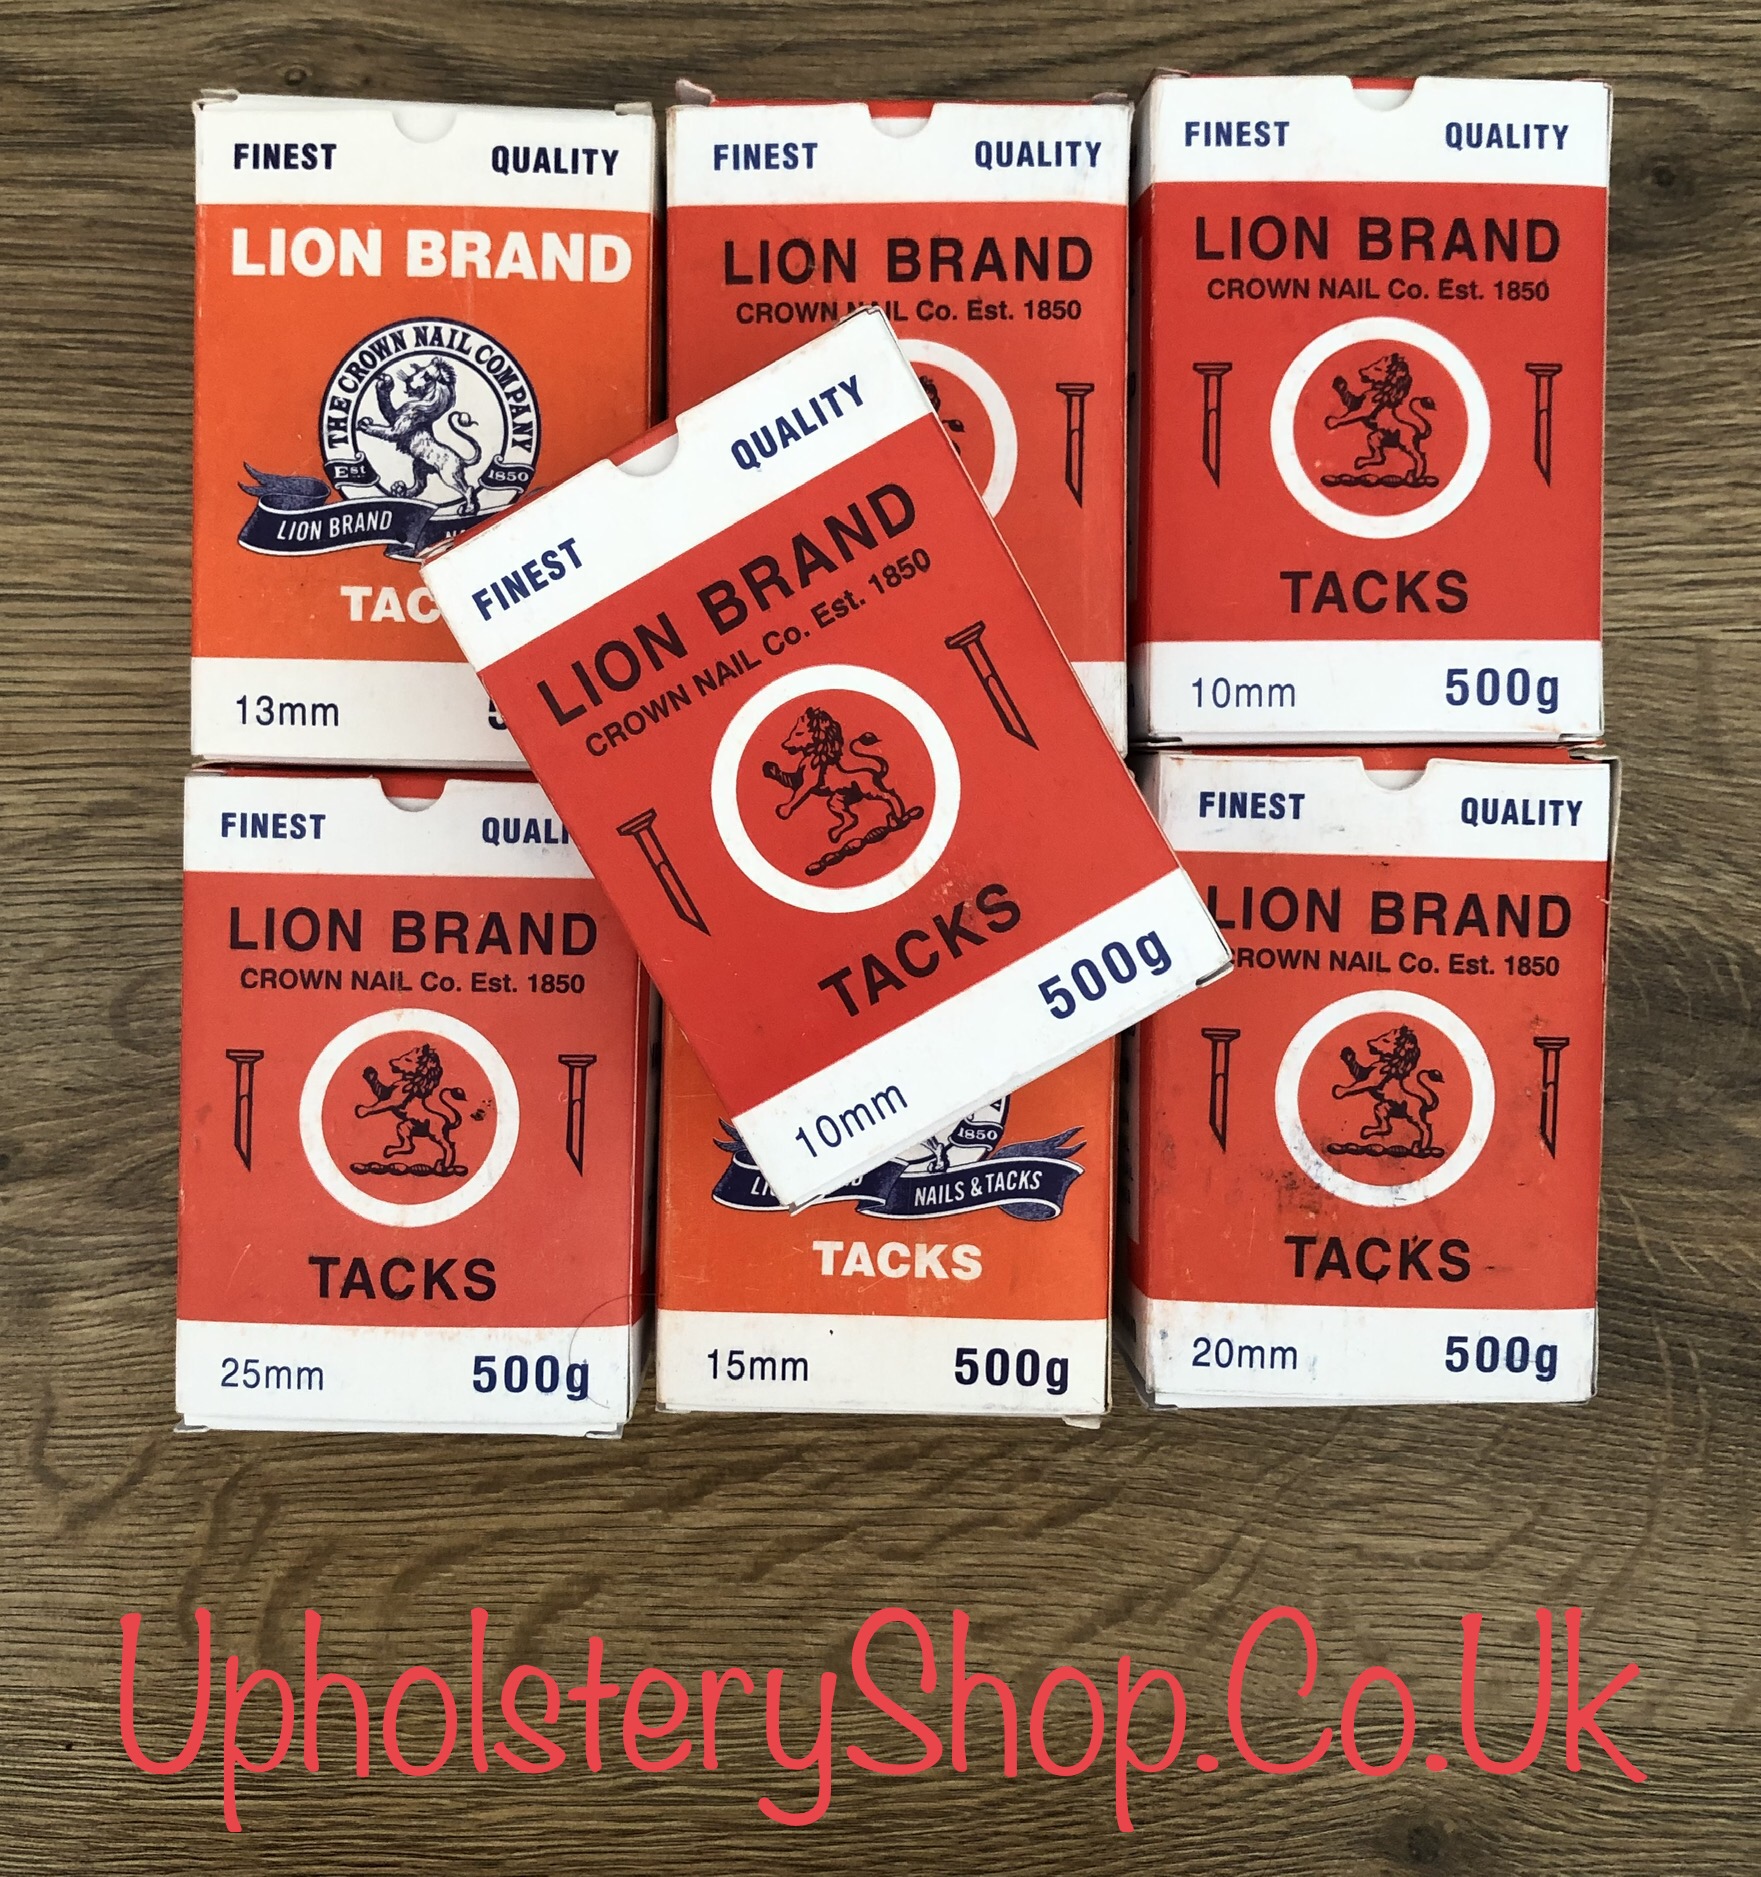 Upholstery 25mm Fine 1/2 kg Lion Brand Tacks / Pin Nails for Carpets Blued